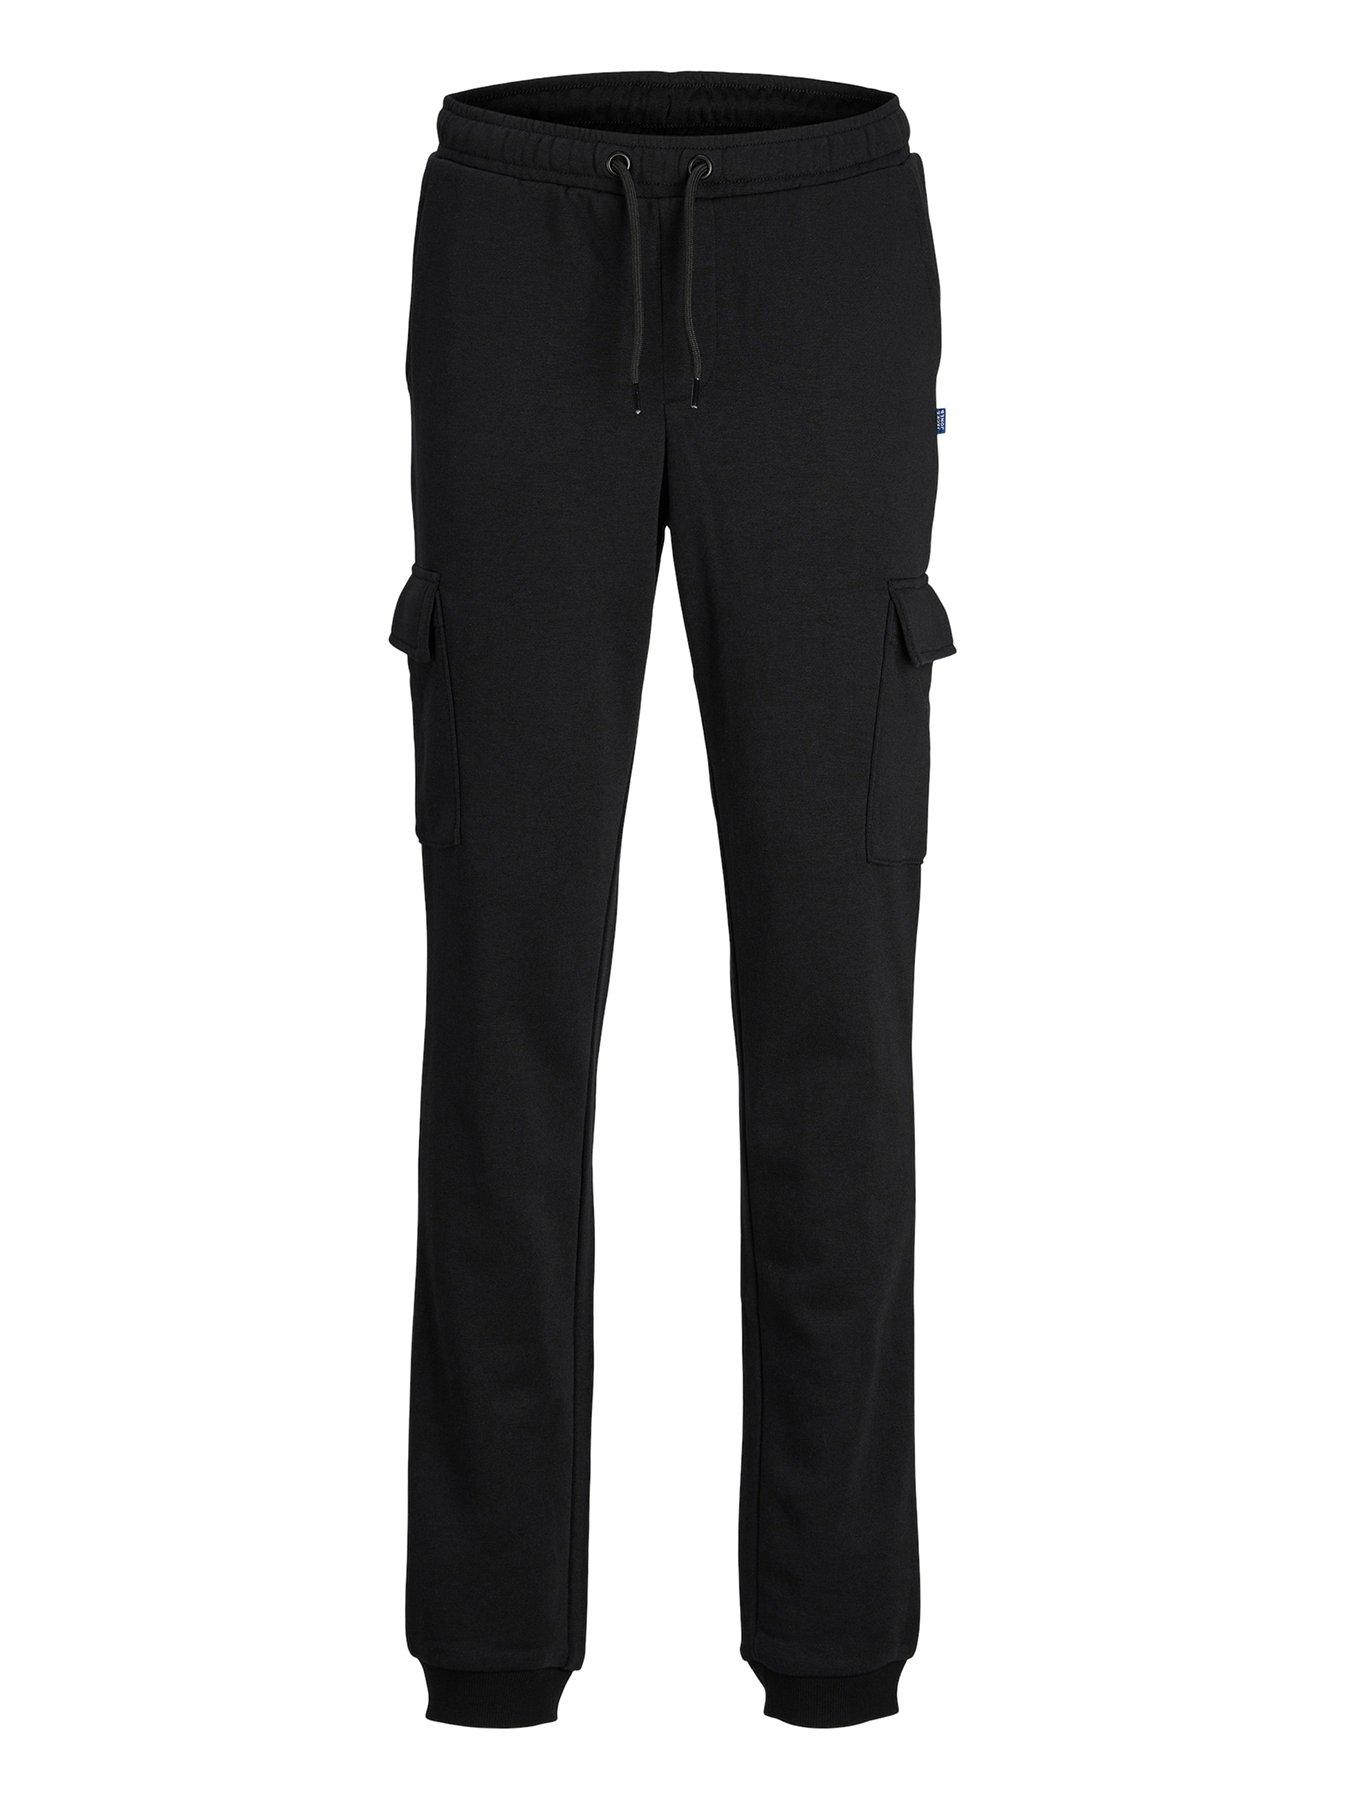 Jack & Jones Linen trousers for men - Buy now at Boozt.com